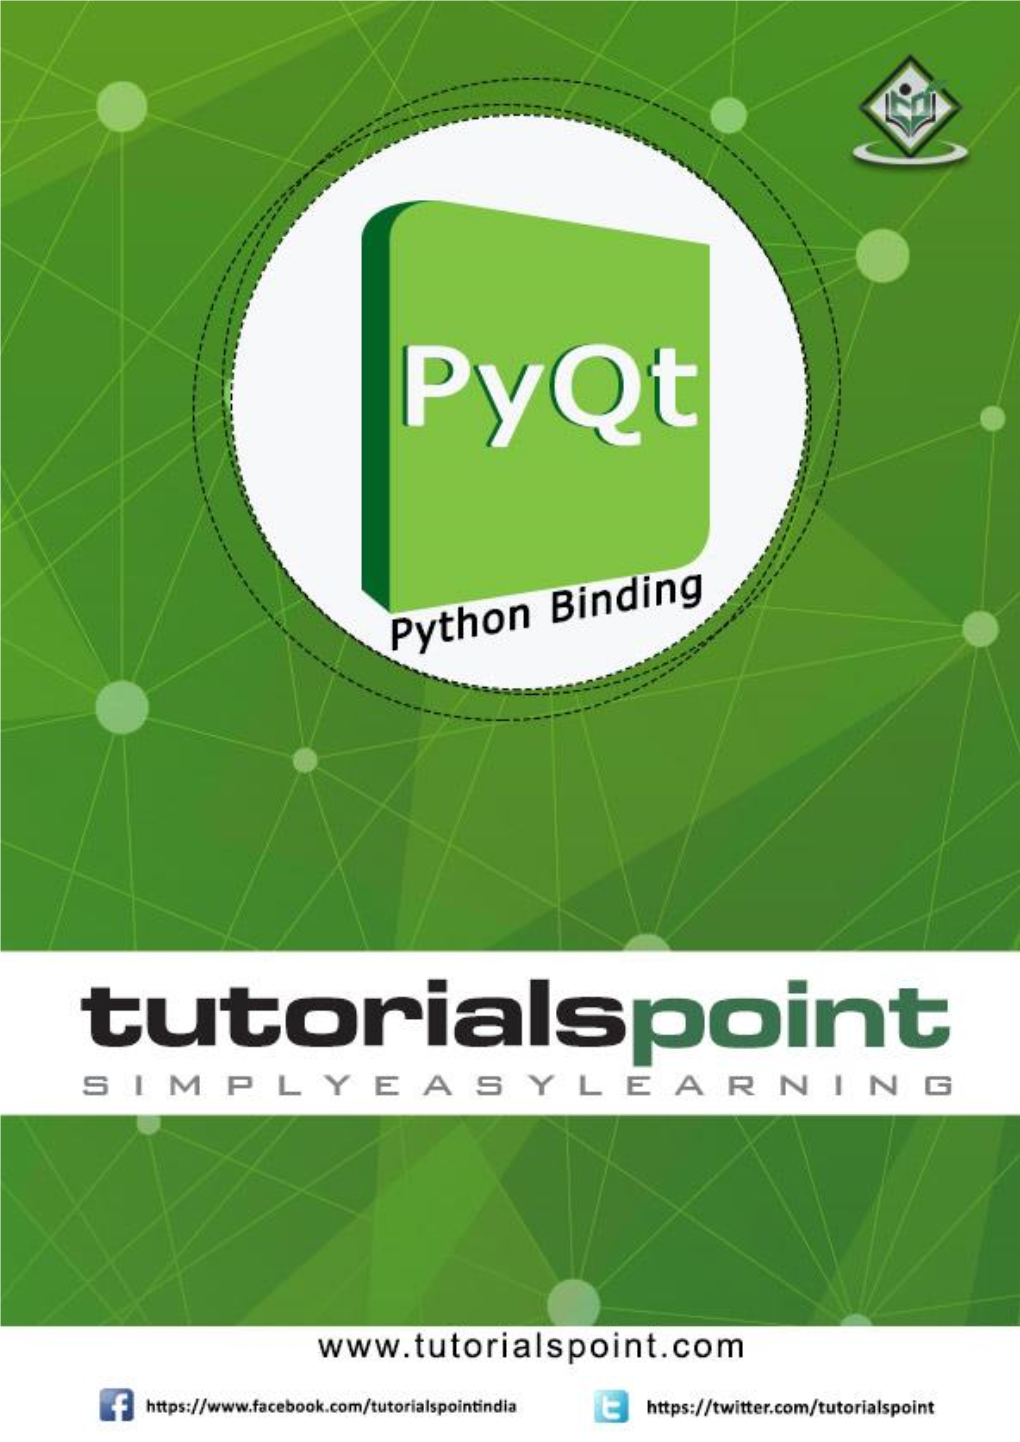 Pyqt Is a GUI Widgets Toolkit